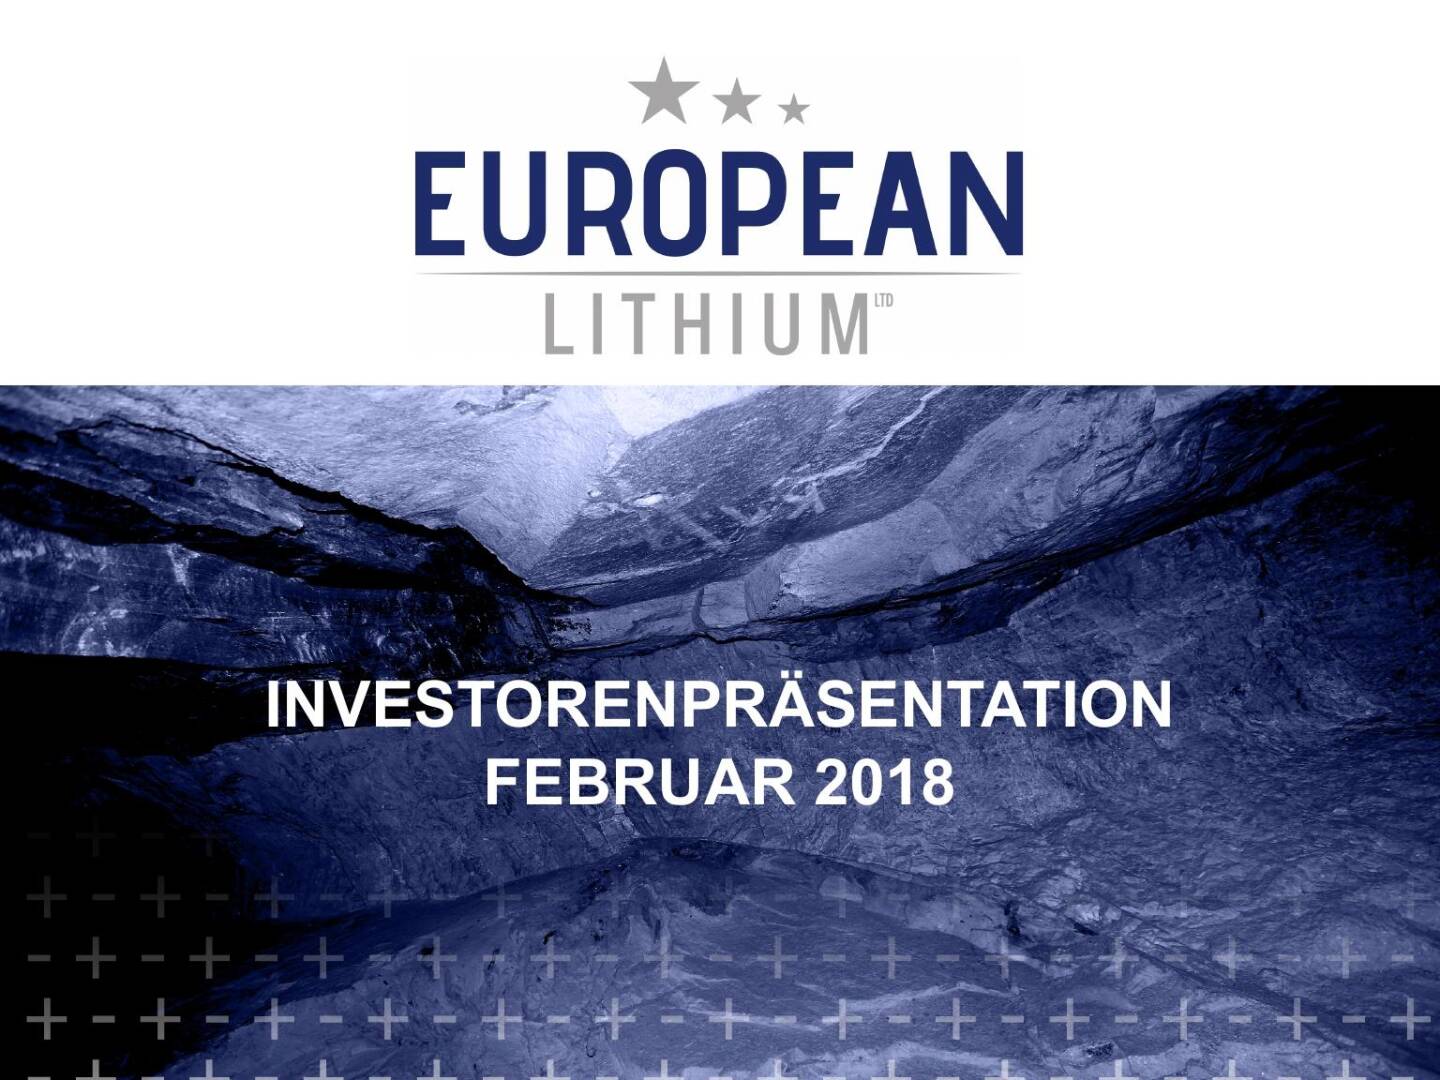 Präsentation European Lithium - Investorenpräsentation